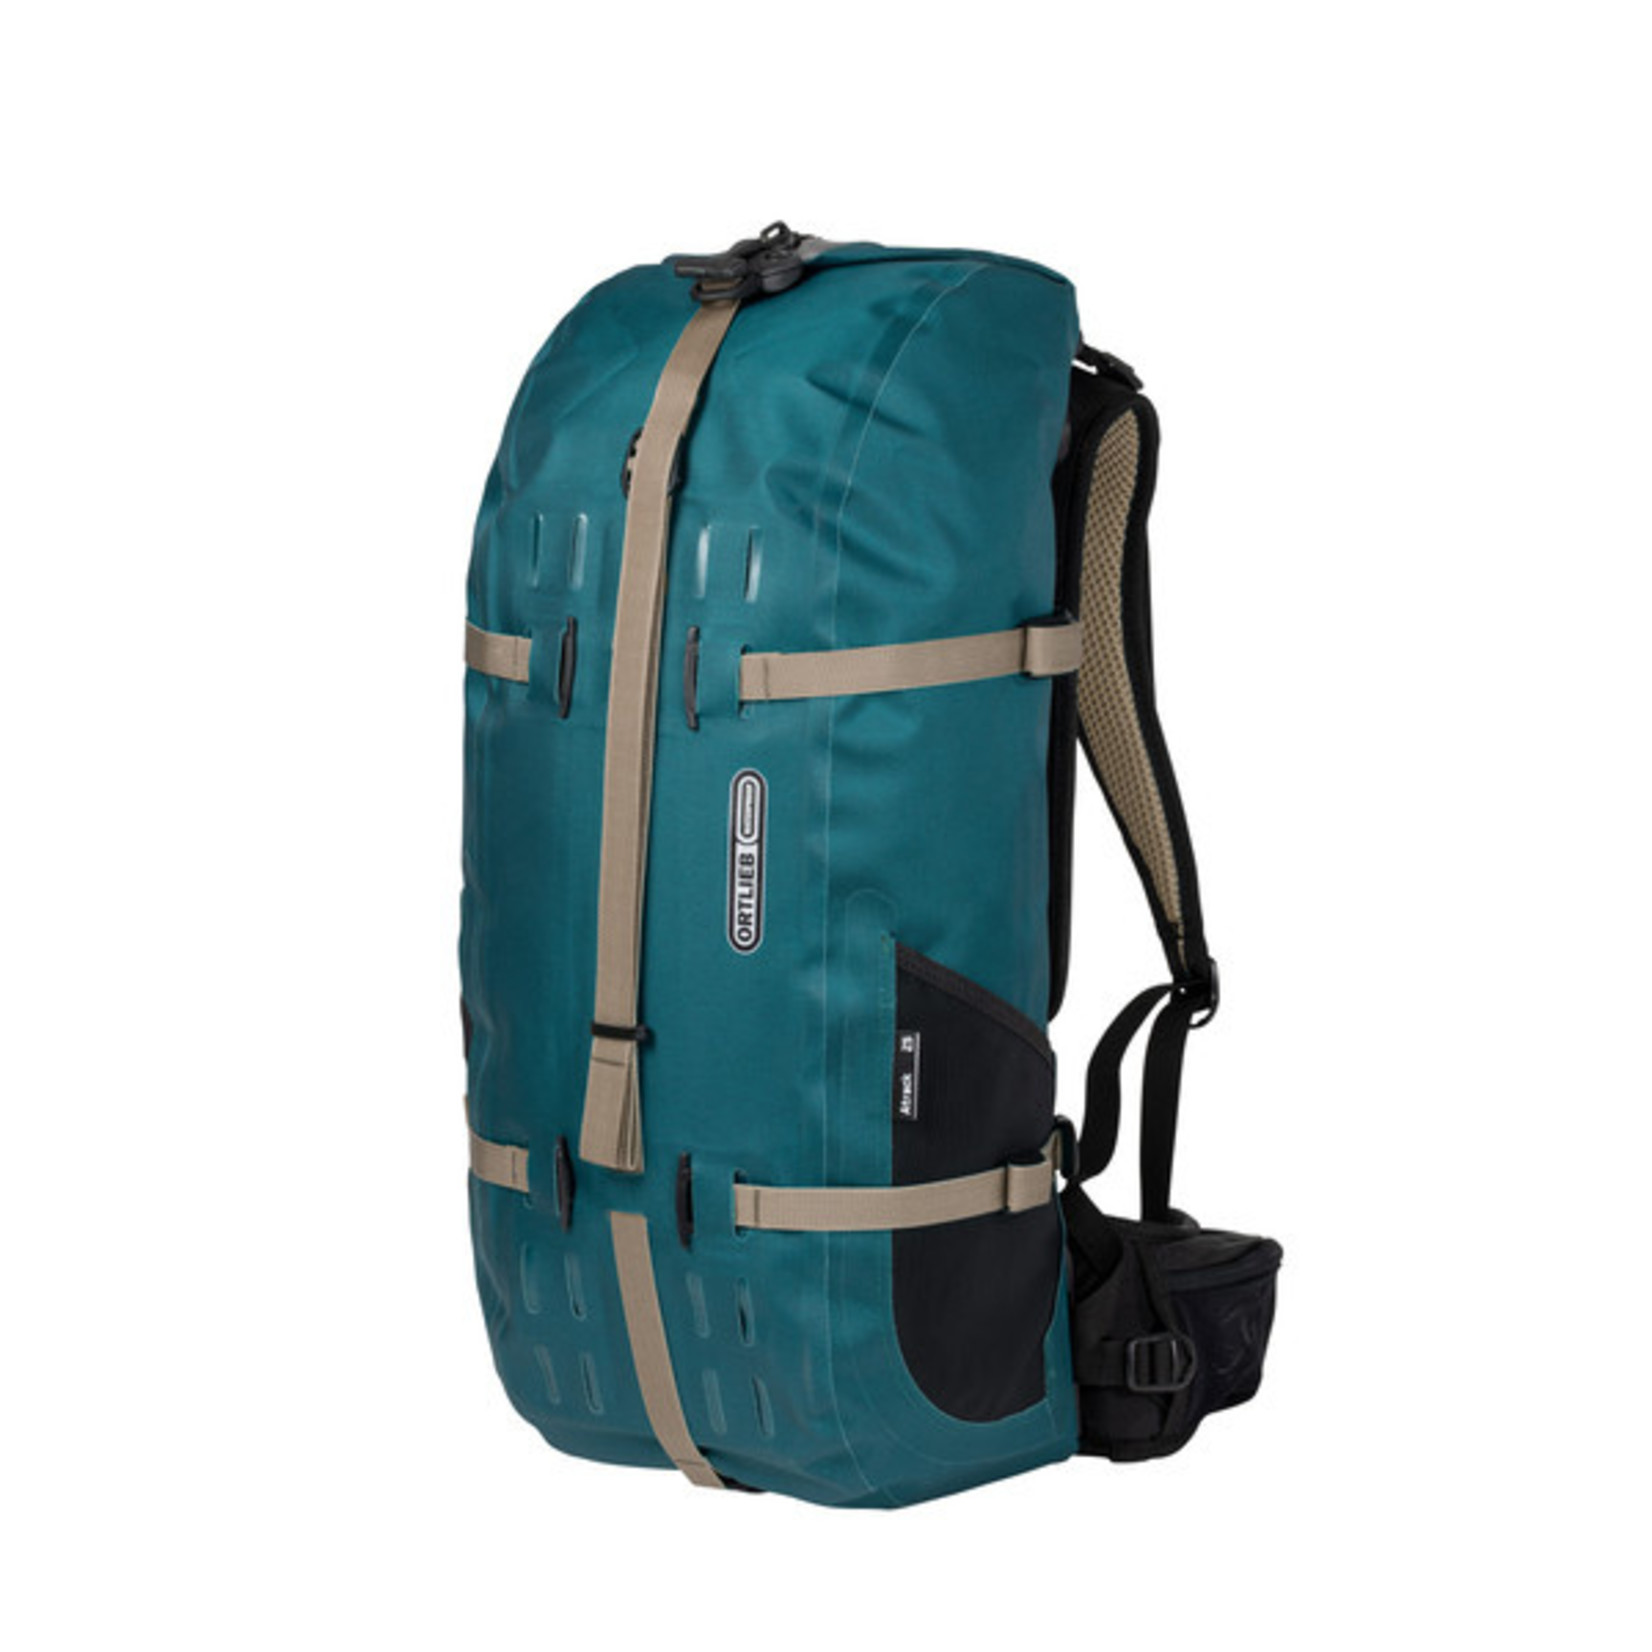 Ortlieb New Ortlieb Atrack Waterproof Backpack Travel Bag R7006 - 25L - Petrol